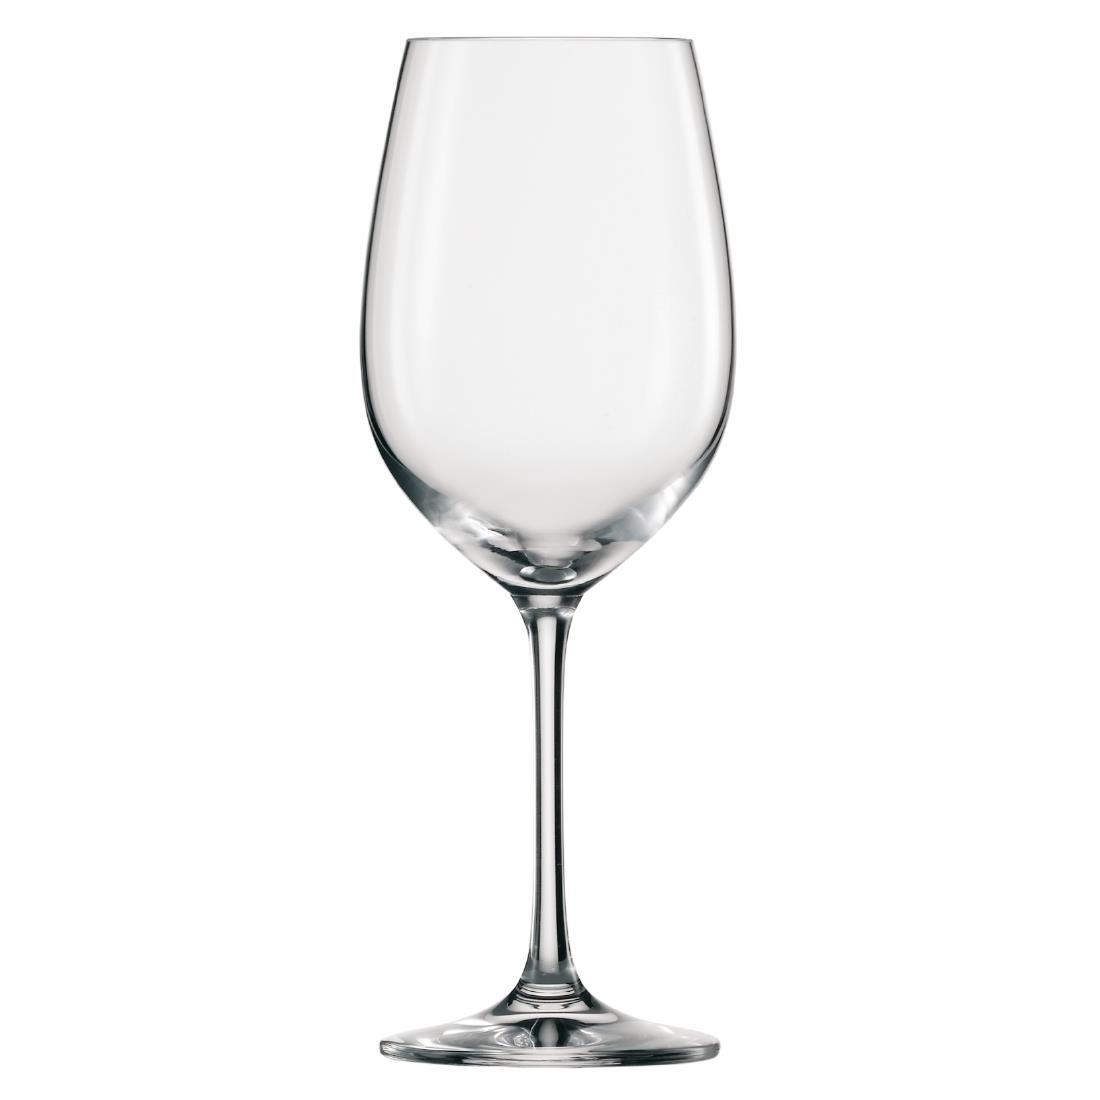 Schott Zwiesel Ivento White Wine Glasses 340ml (Pack of 6) - GL136  - 1